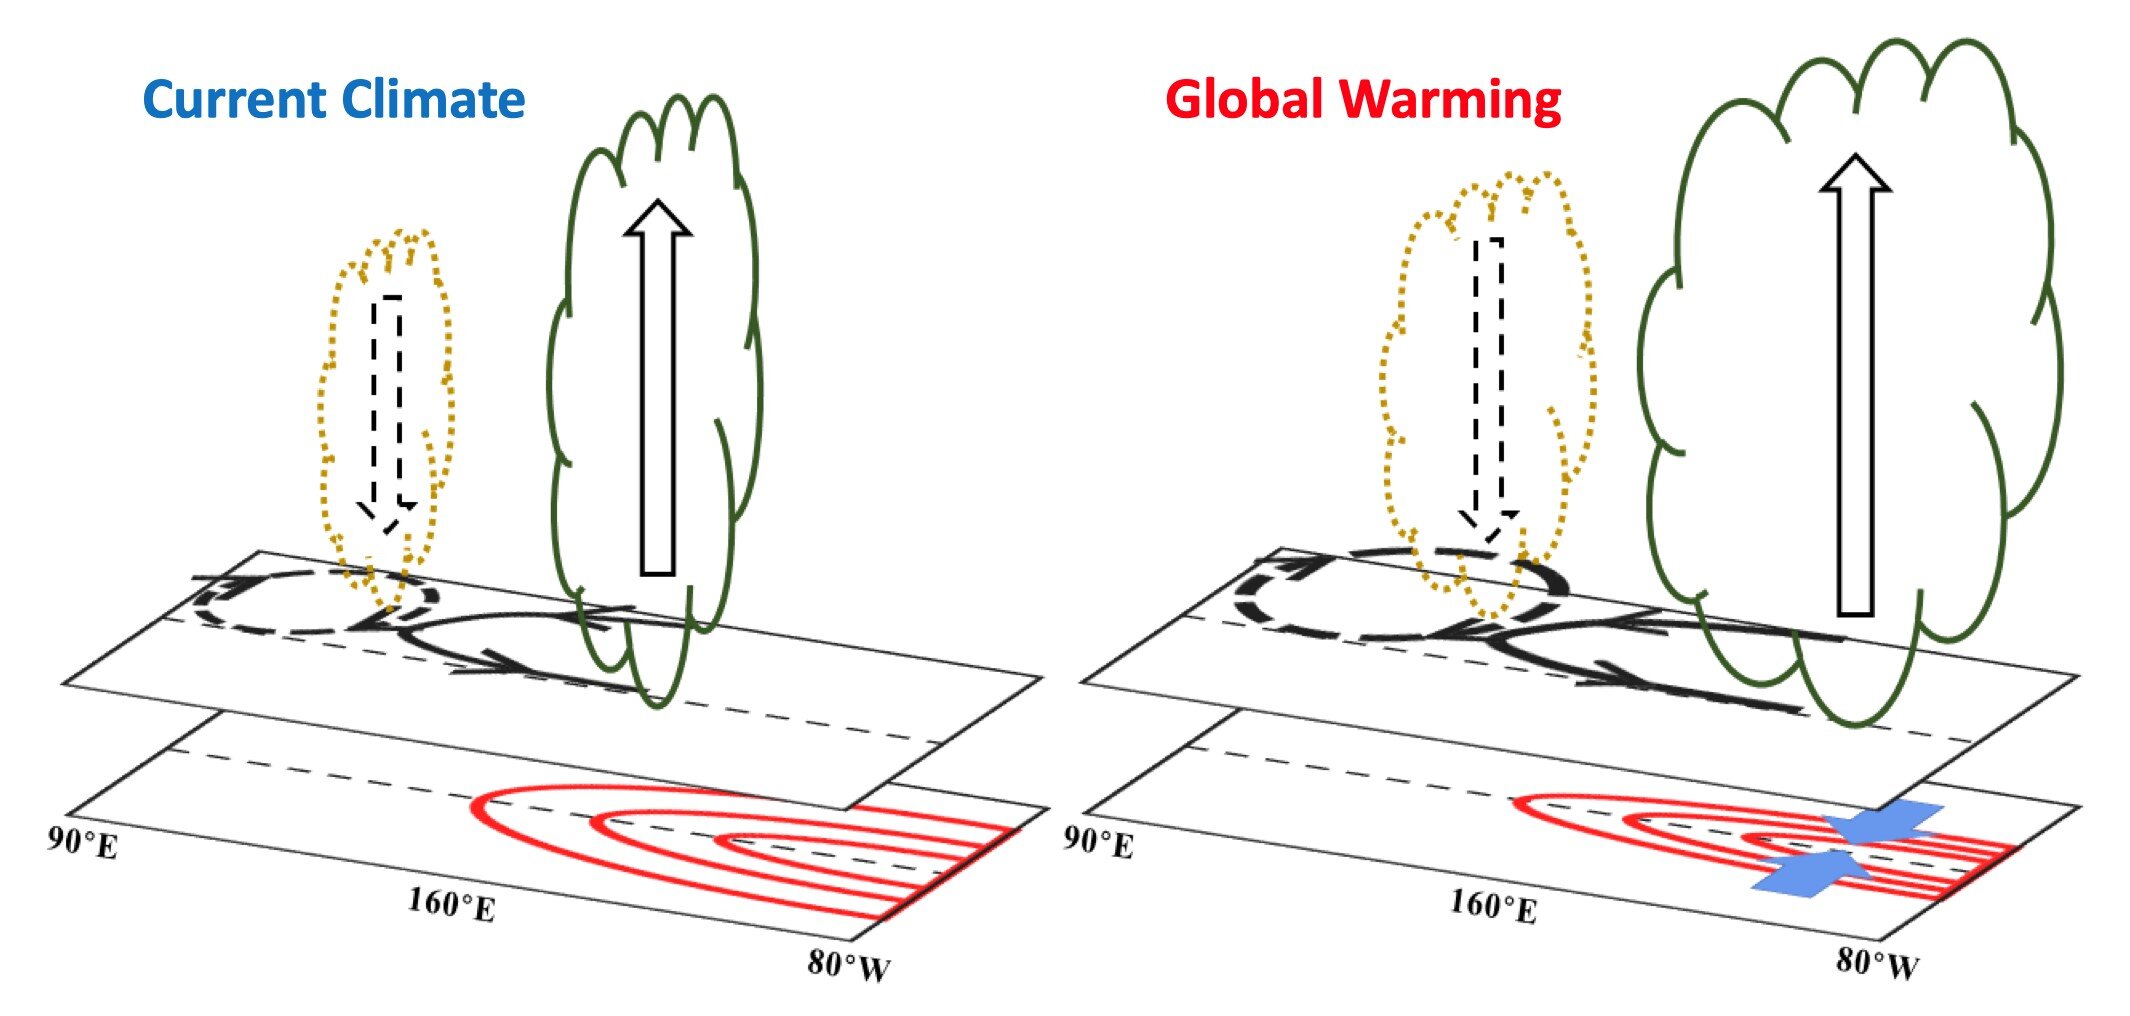 El Niño-Southern Oscillation heat engine shifts eastward under global warming - Phys.org